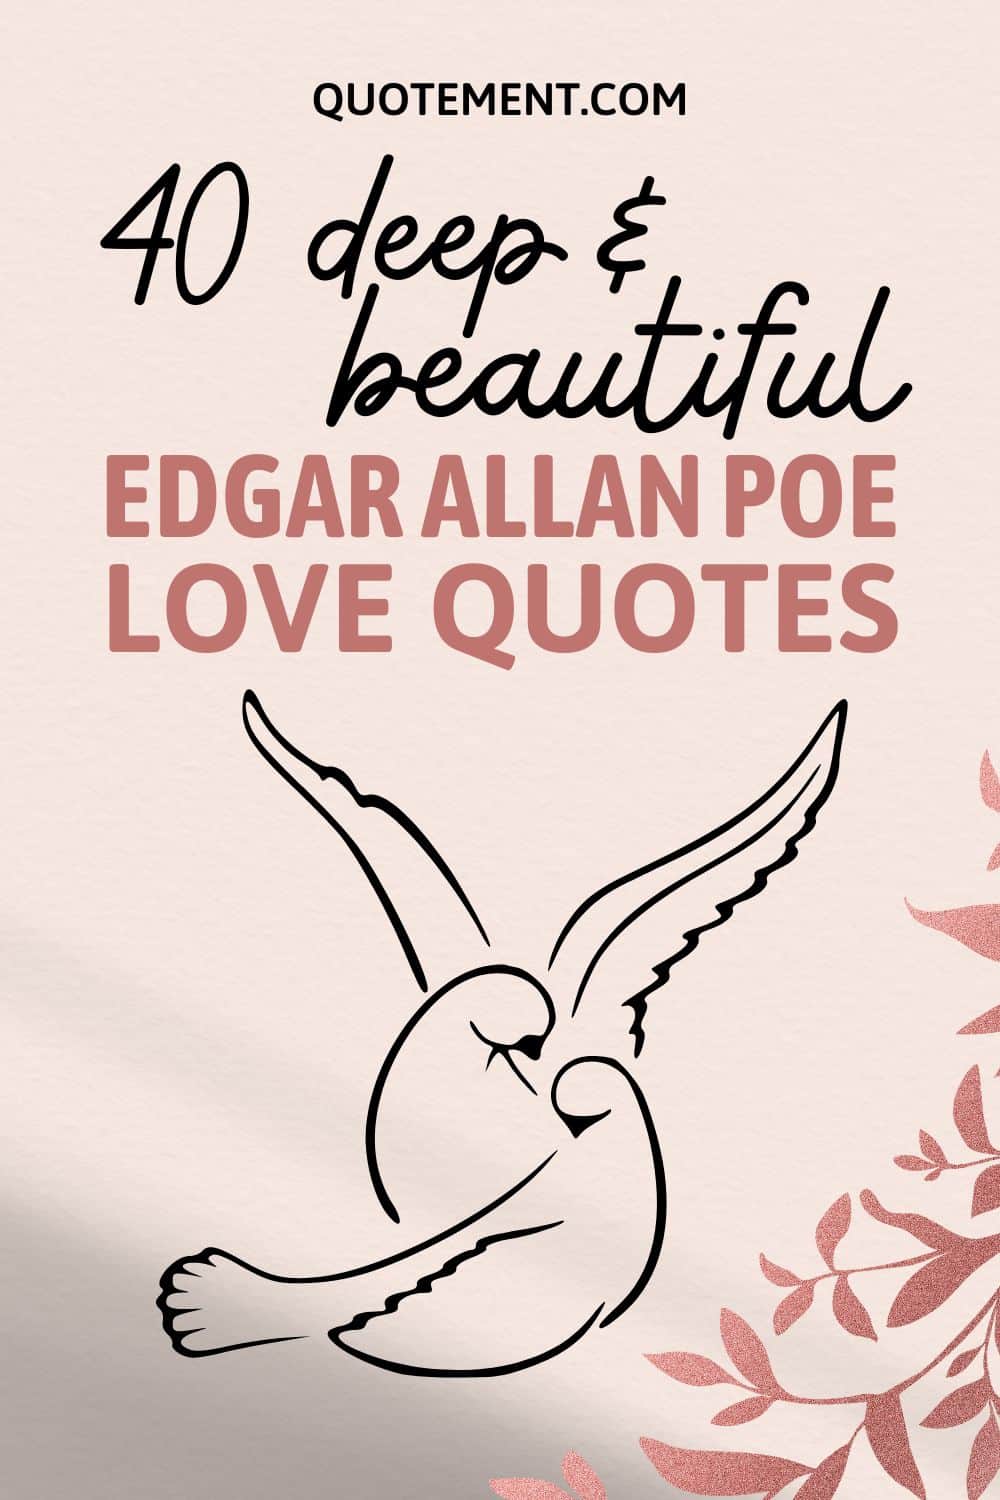 40 Edgar Allan Poe Love Quotes To Make You Rethink Romance
